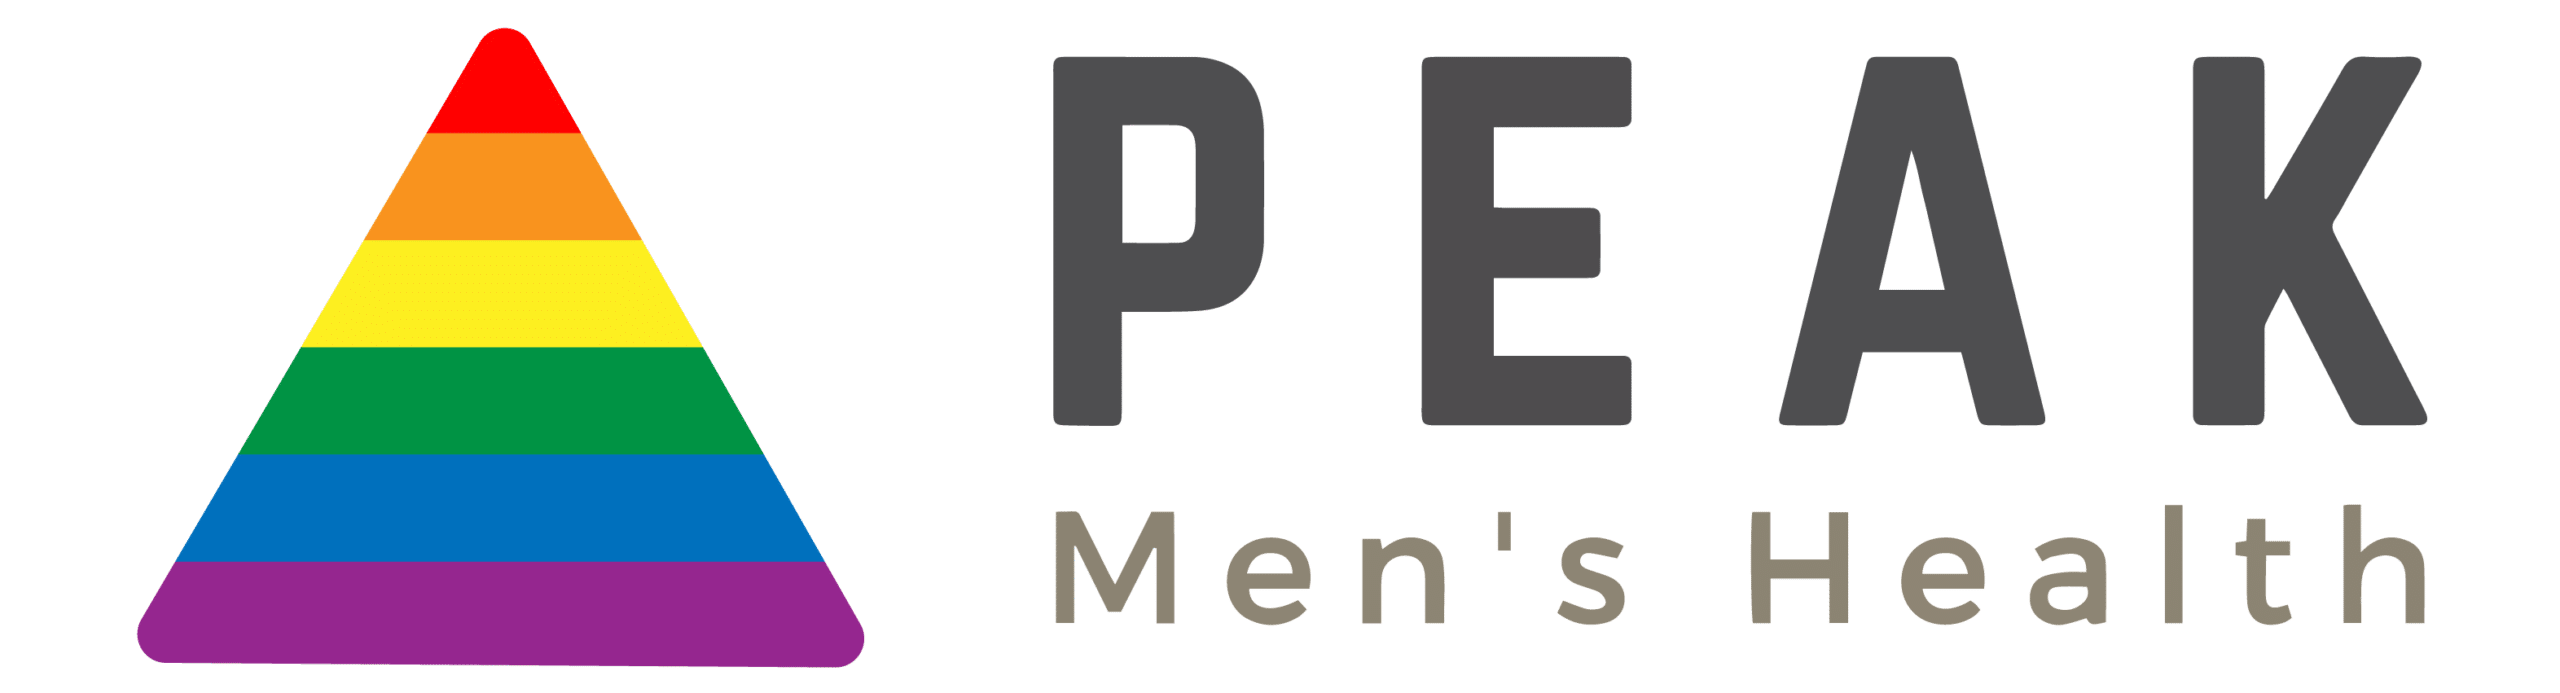 Men's-Health-Logos